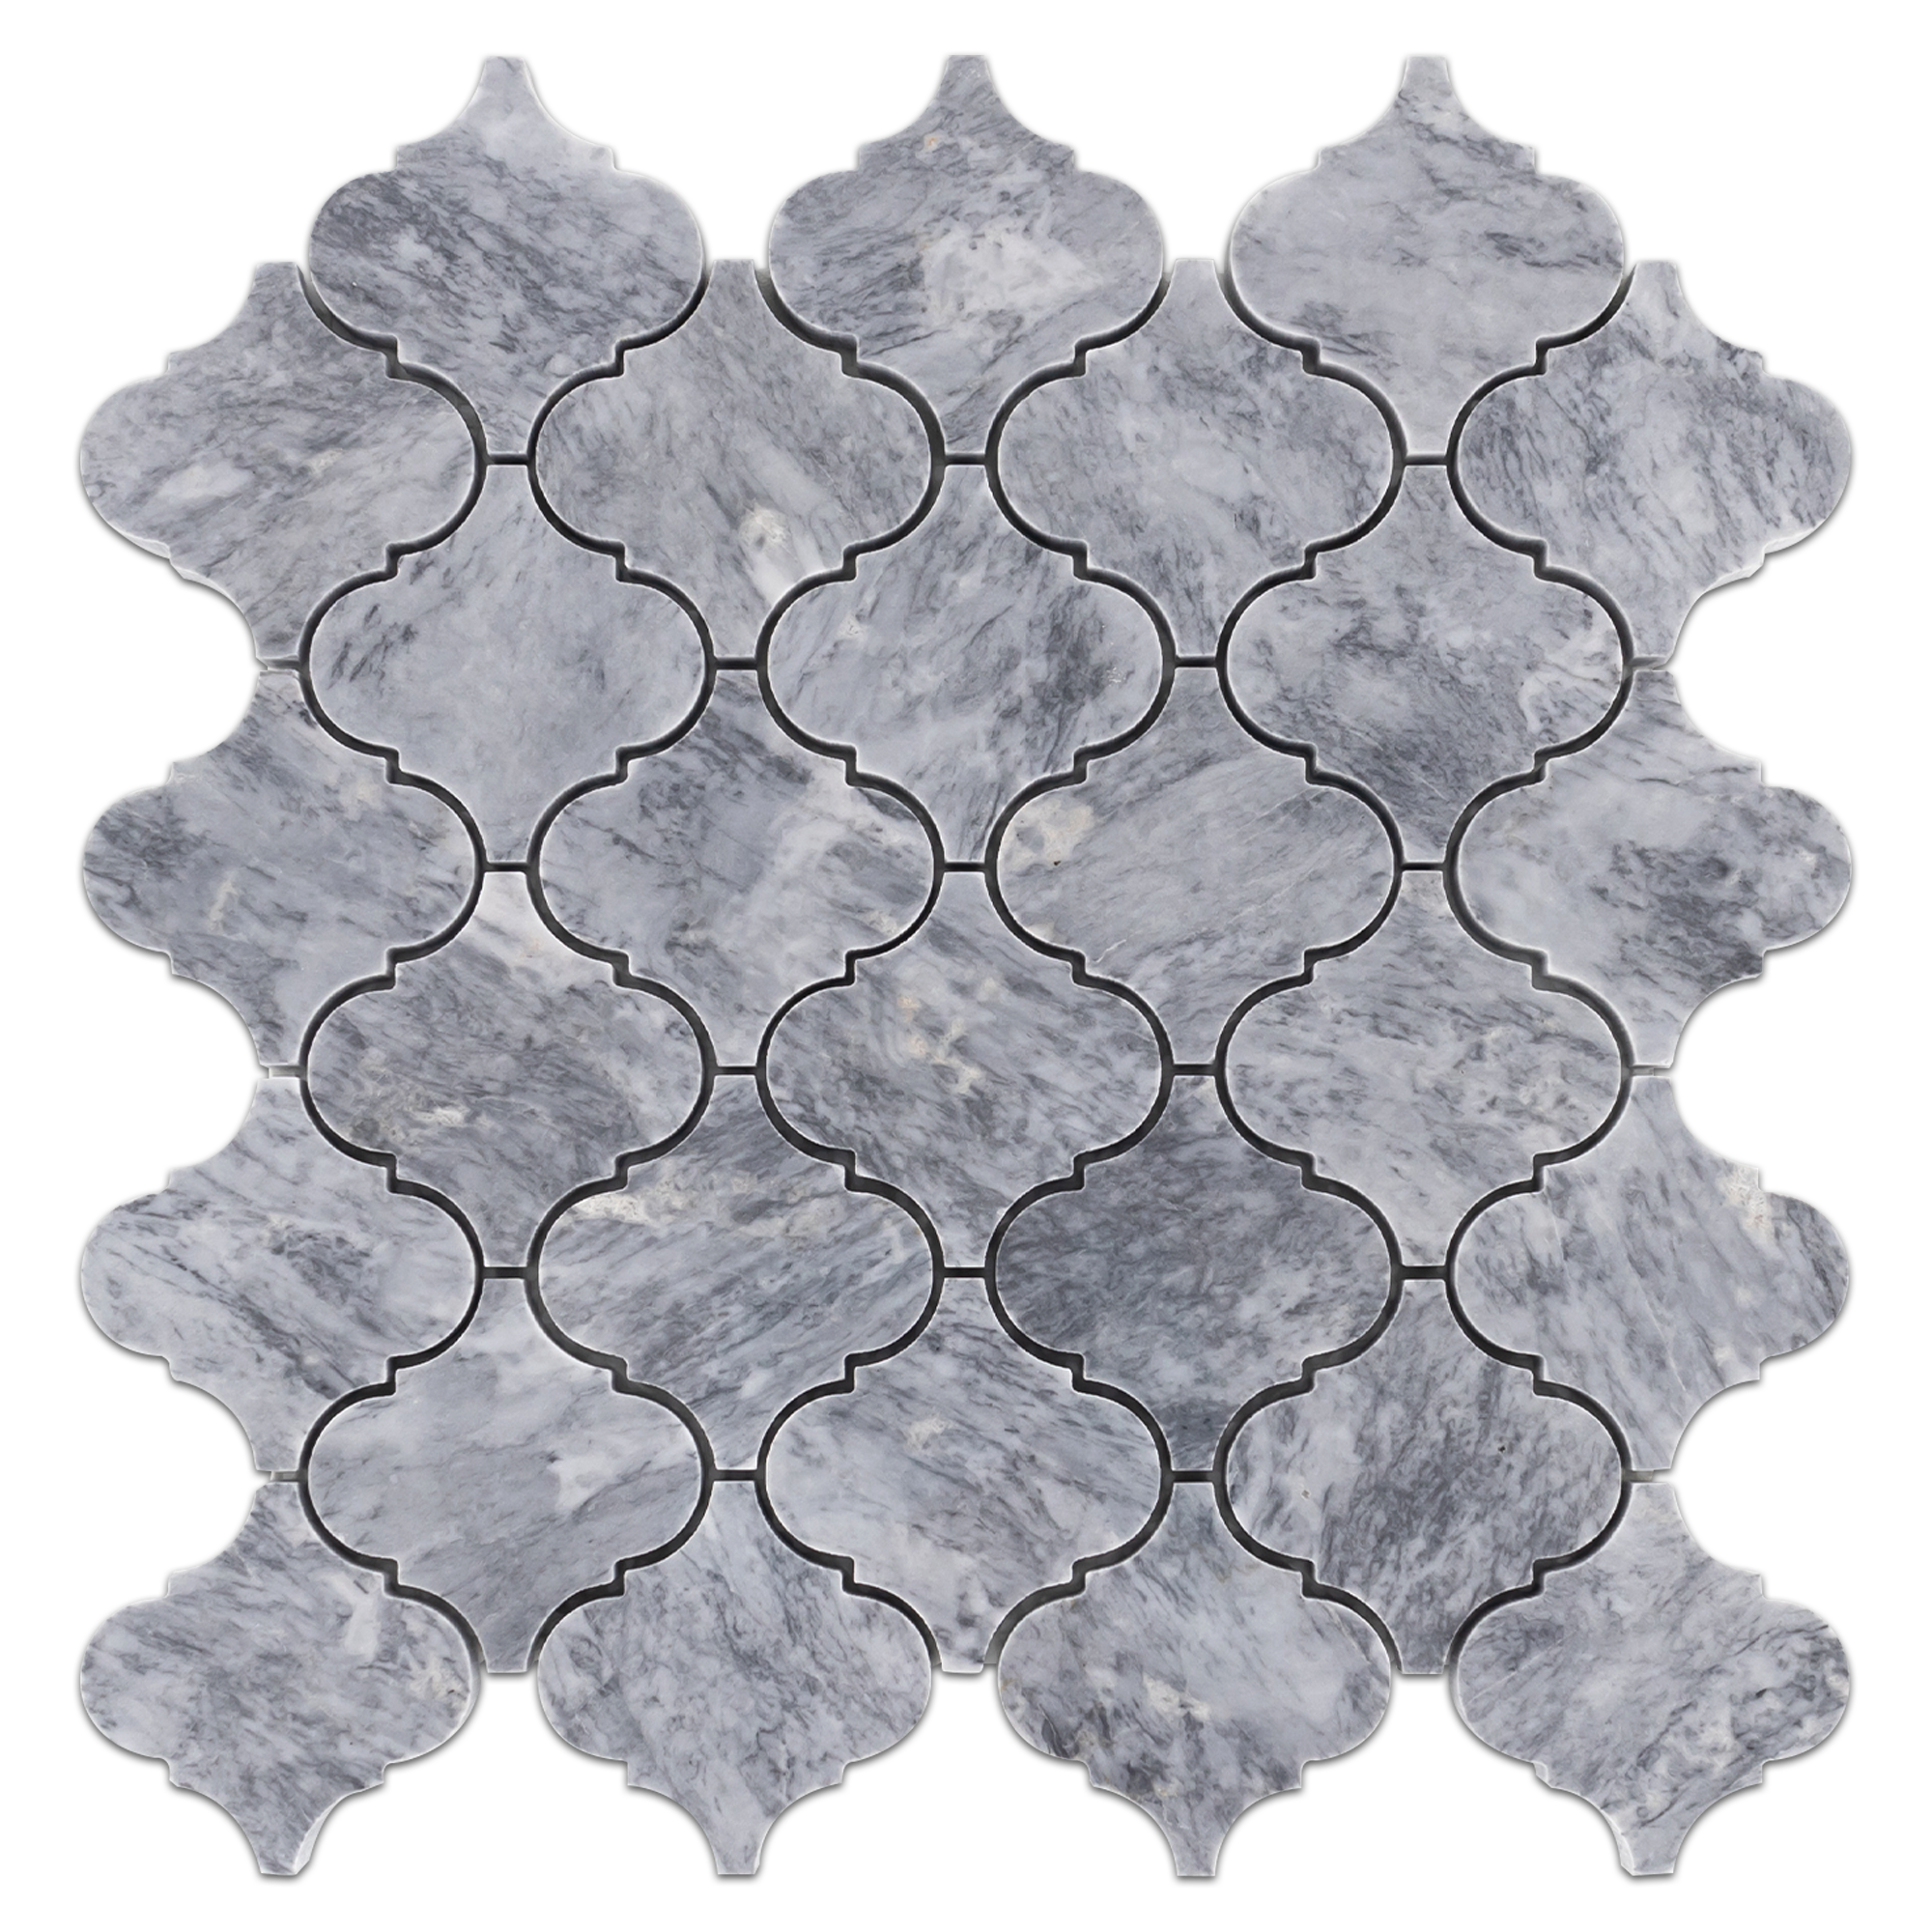 Elon Pacific Gray Marble 3 Lantern Field Mosaic 12x12 Tile - Polished Finish - Surface Group International Product